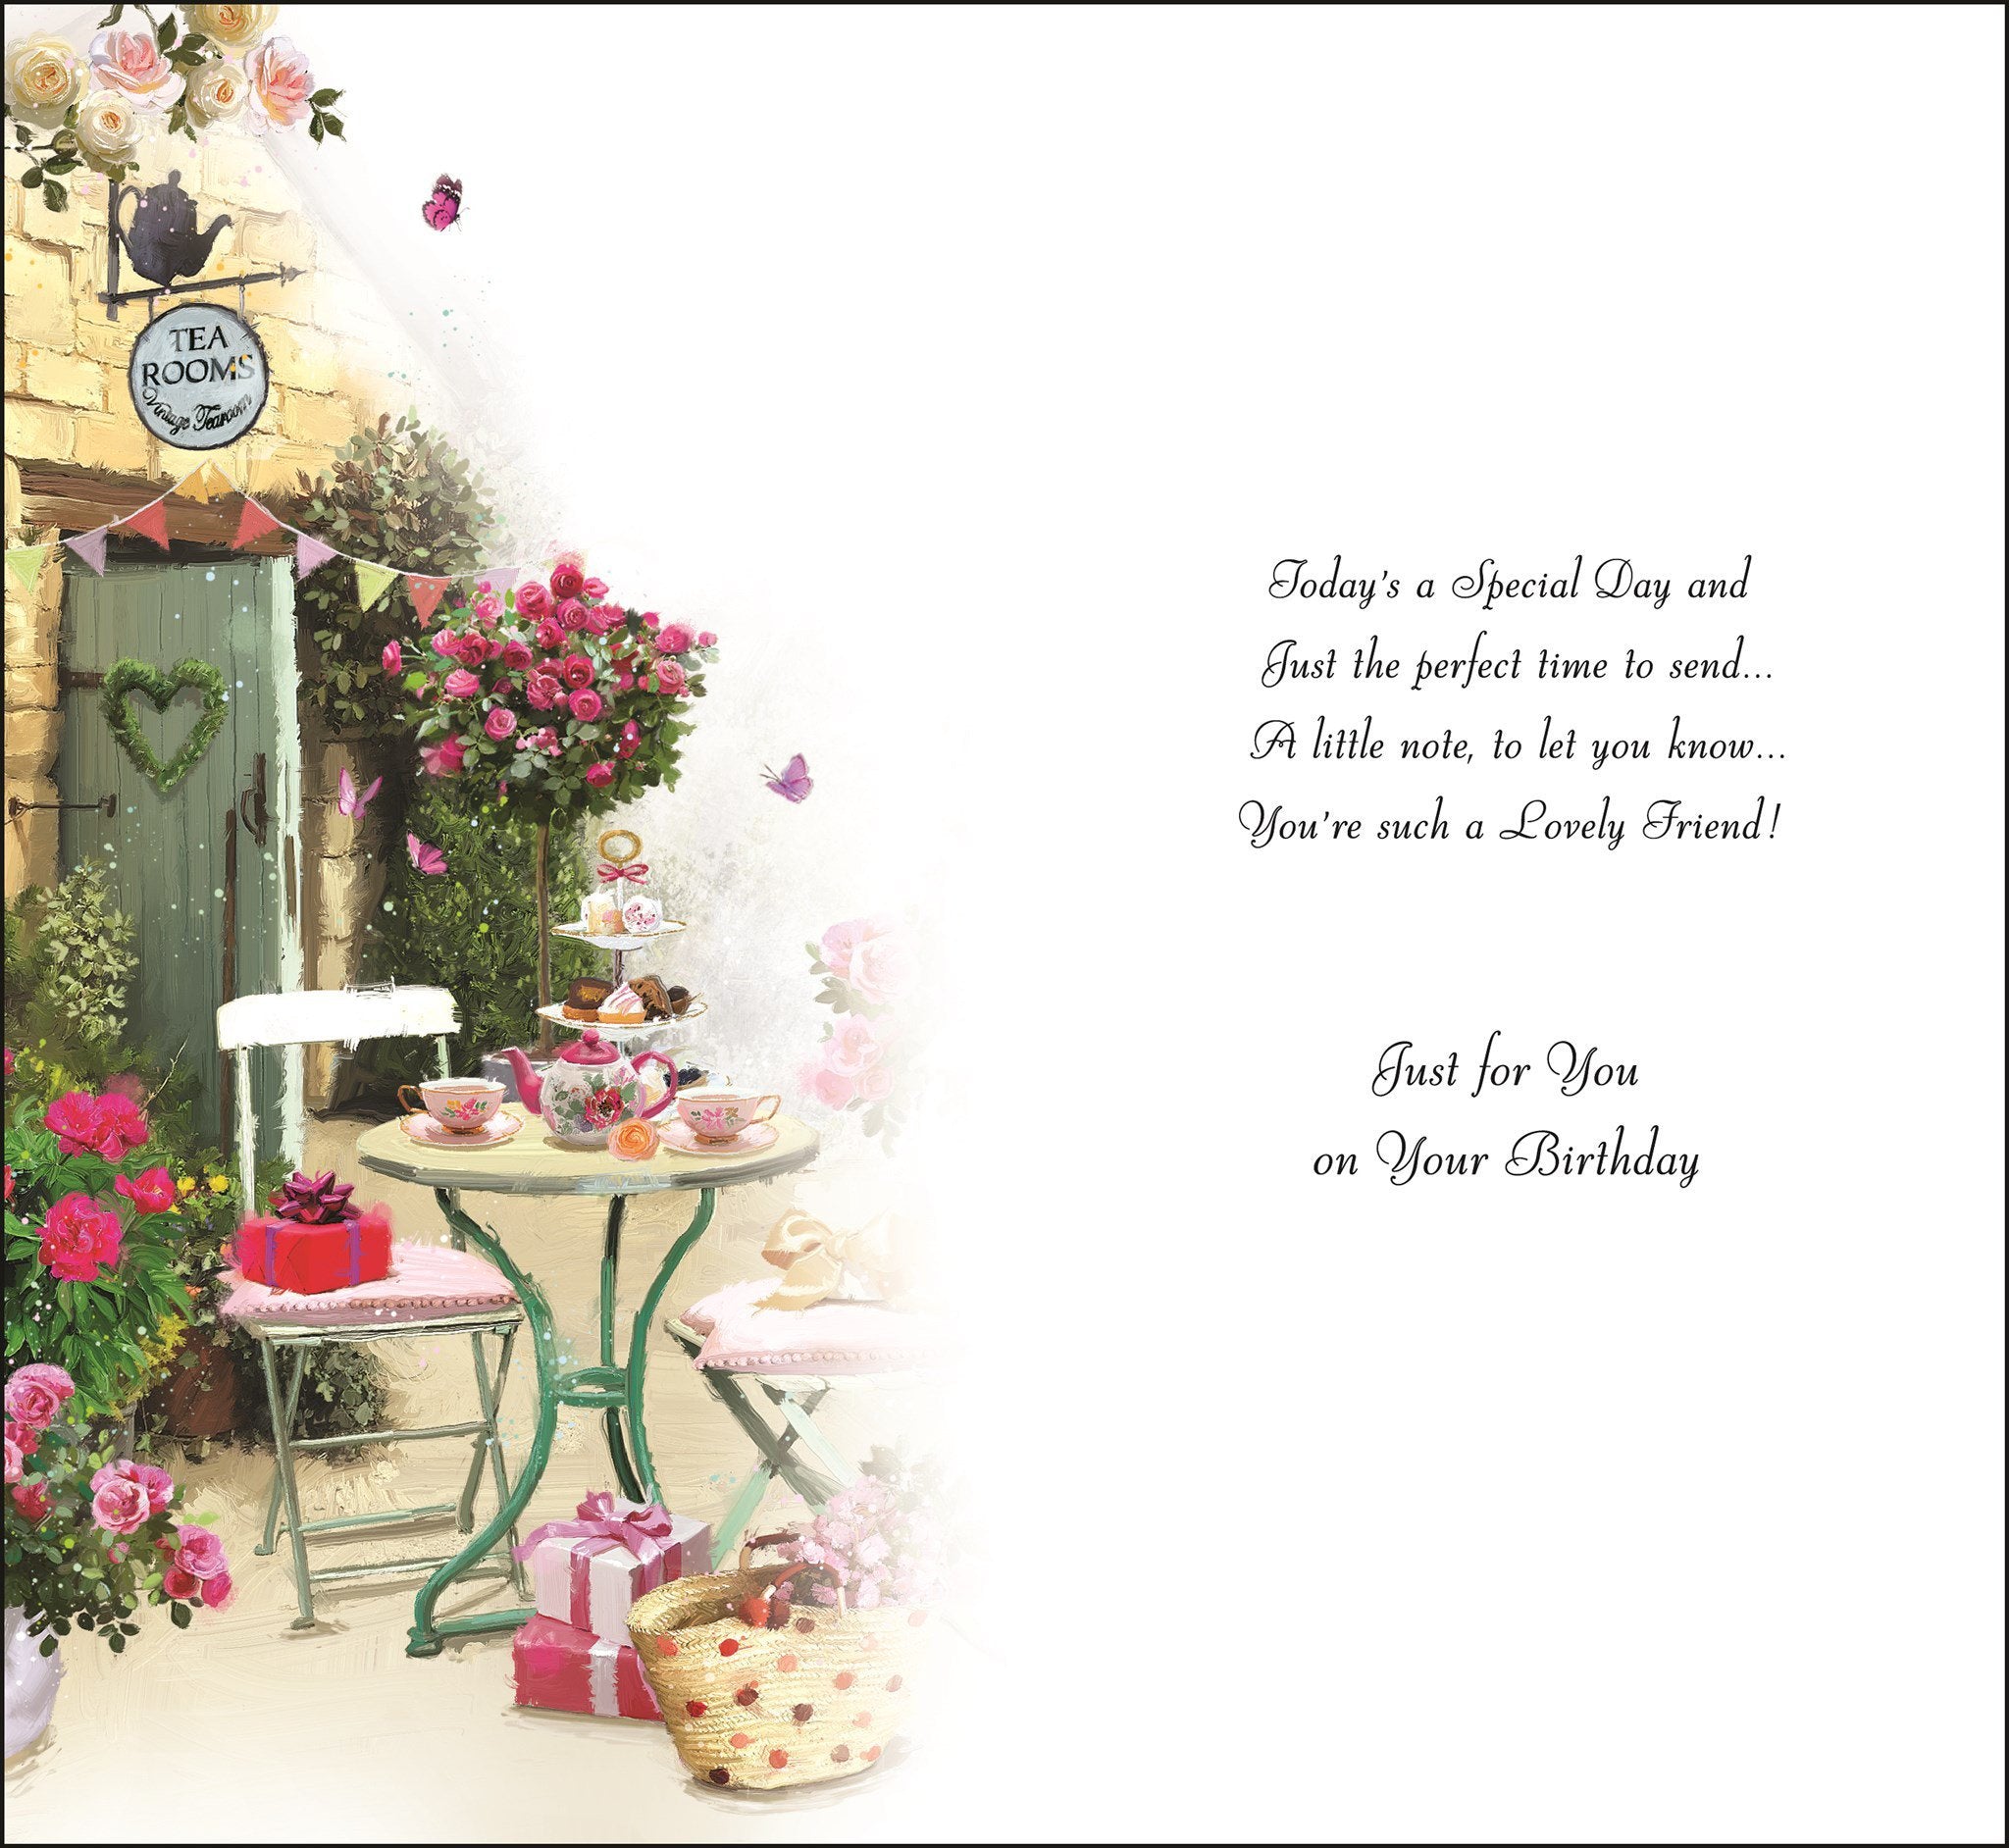 Inside of Special Friend Birthday Tea Room Greetings Card